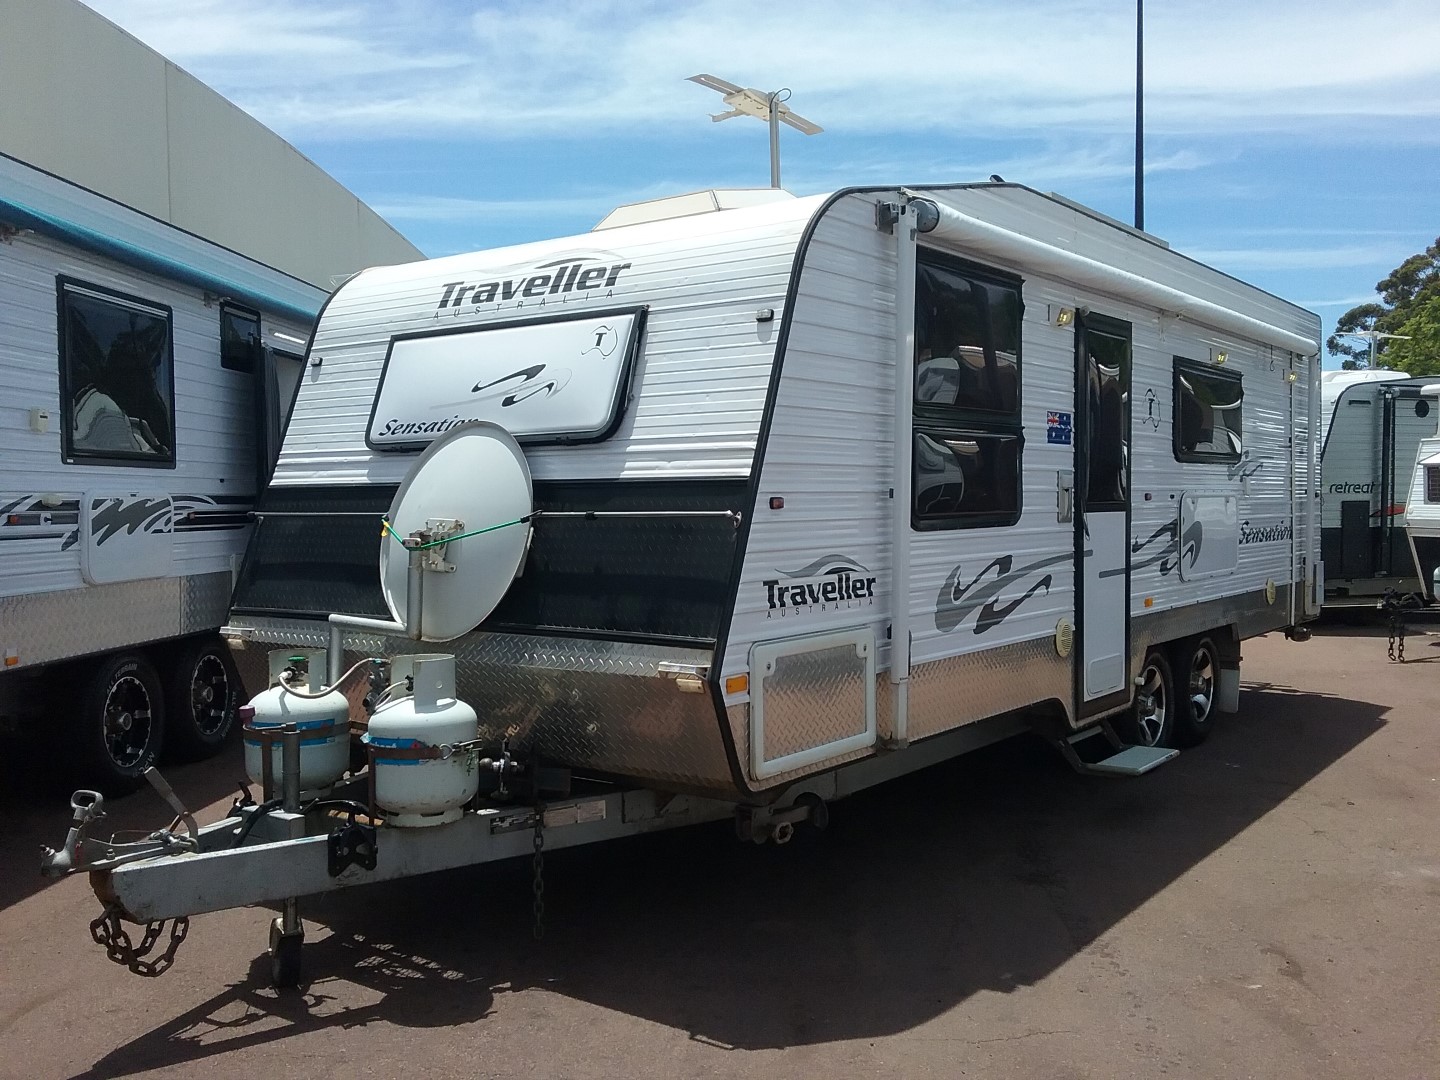 traveller sensation caravan for sale